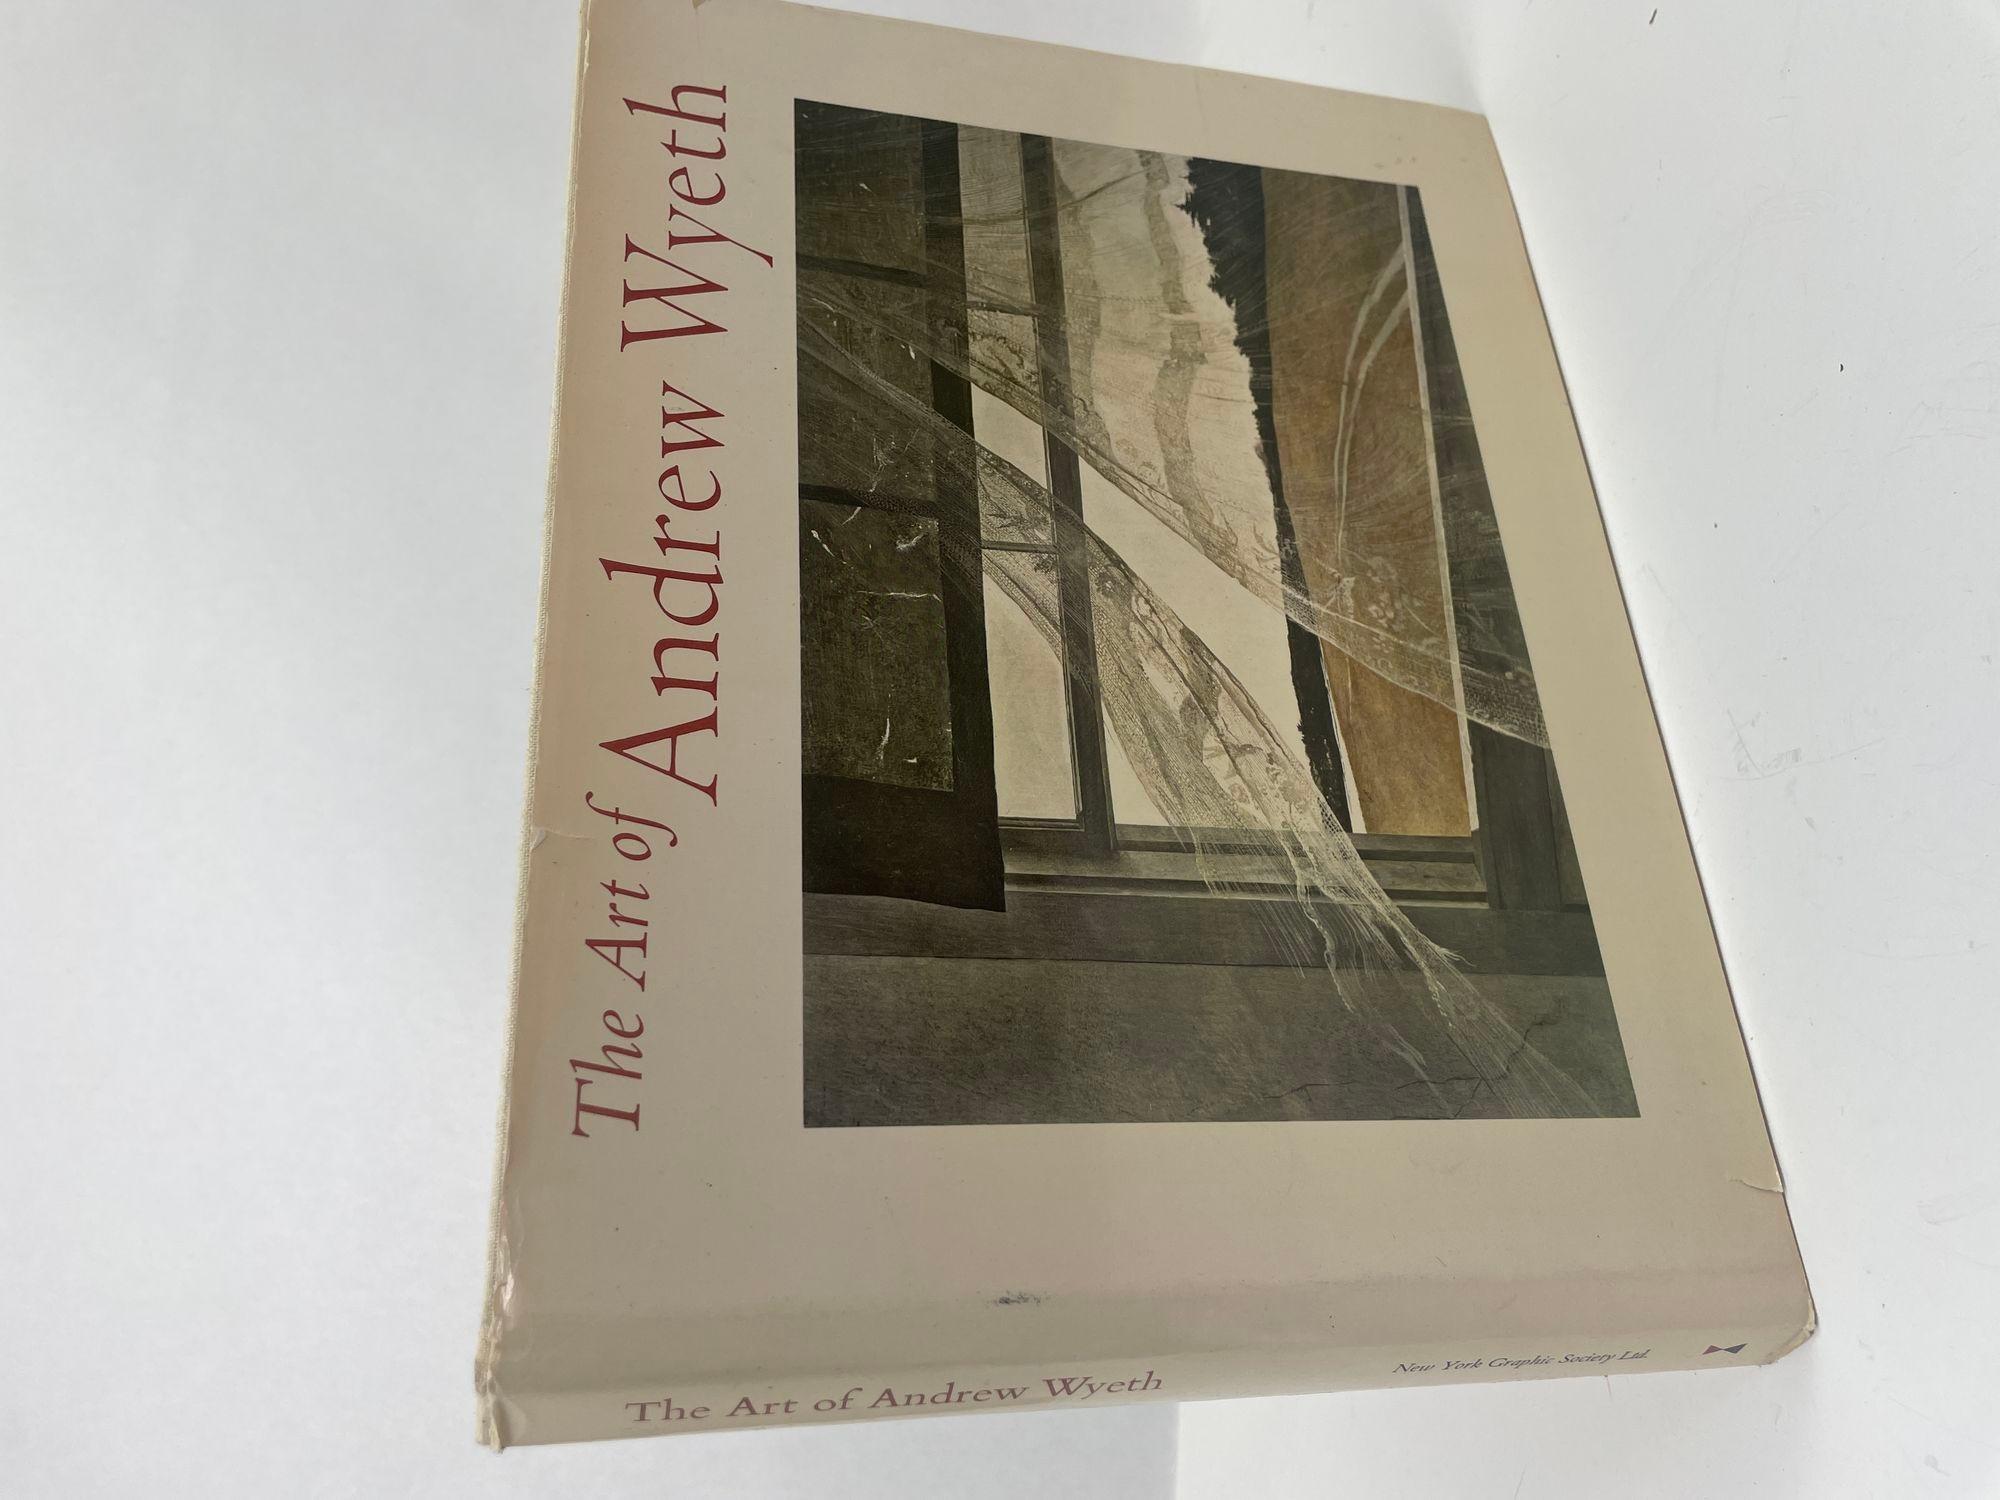 American The Art of Andrew Wyeth by Corn, Wanda M by Corn, Wanda M Hardcover 1st Ed. 1973